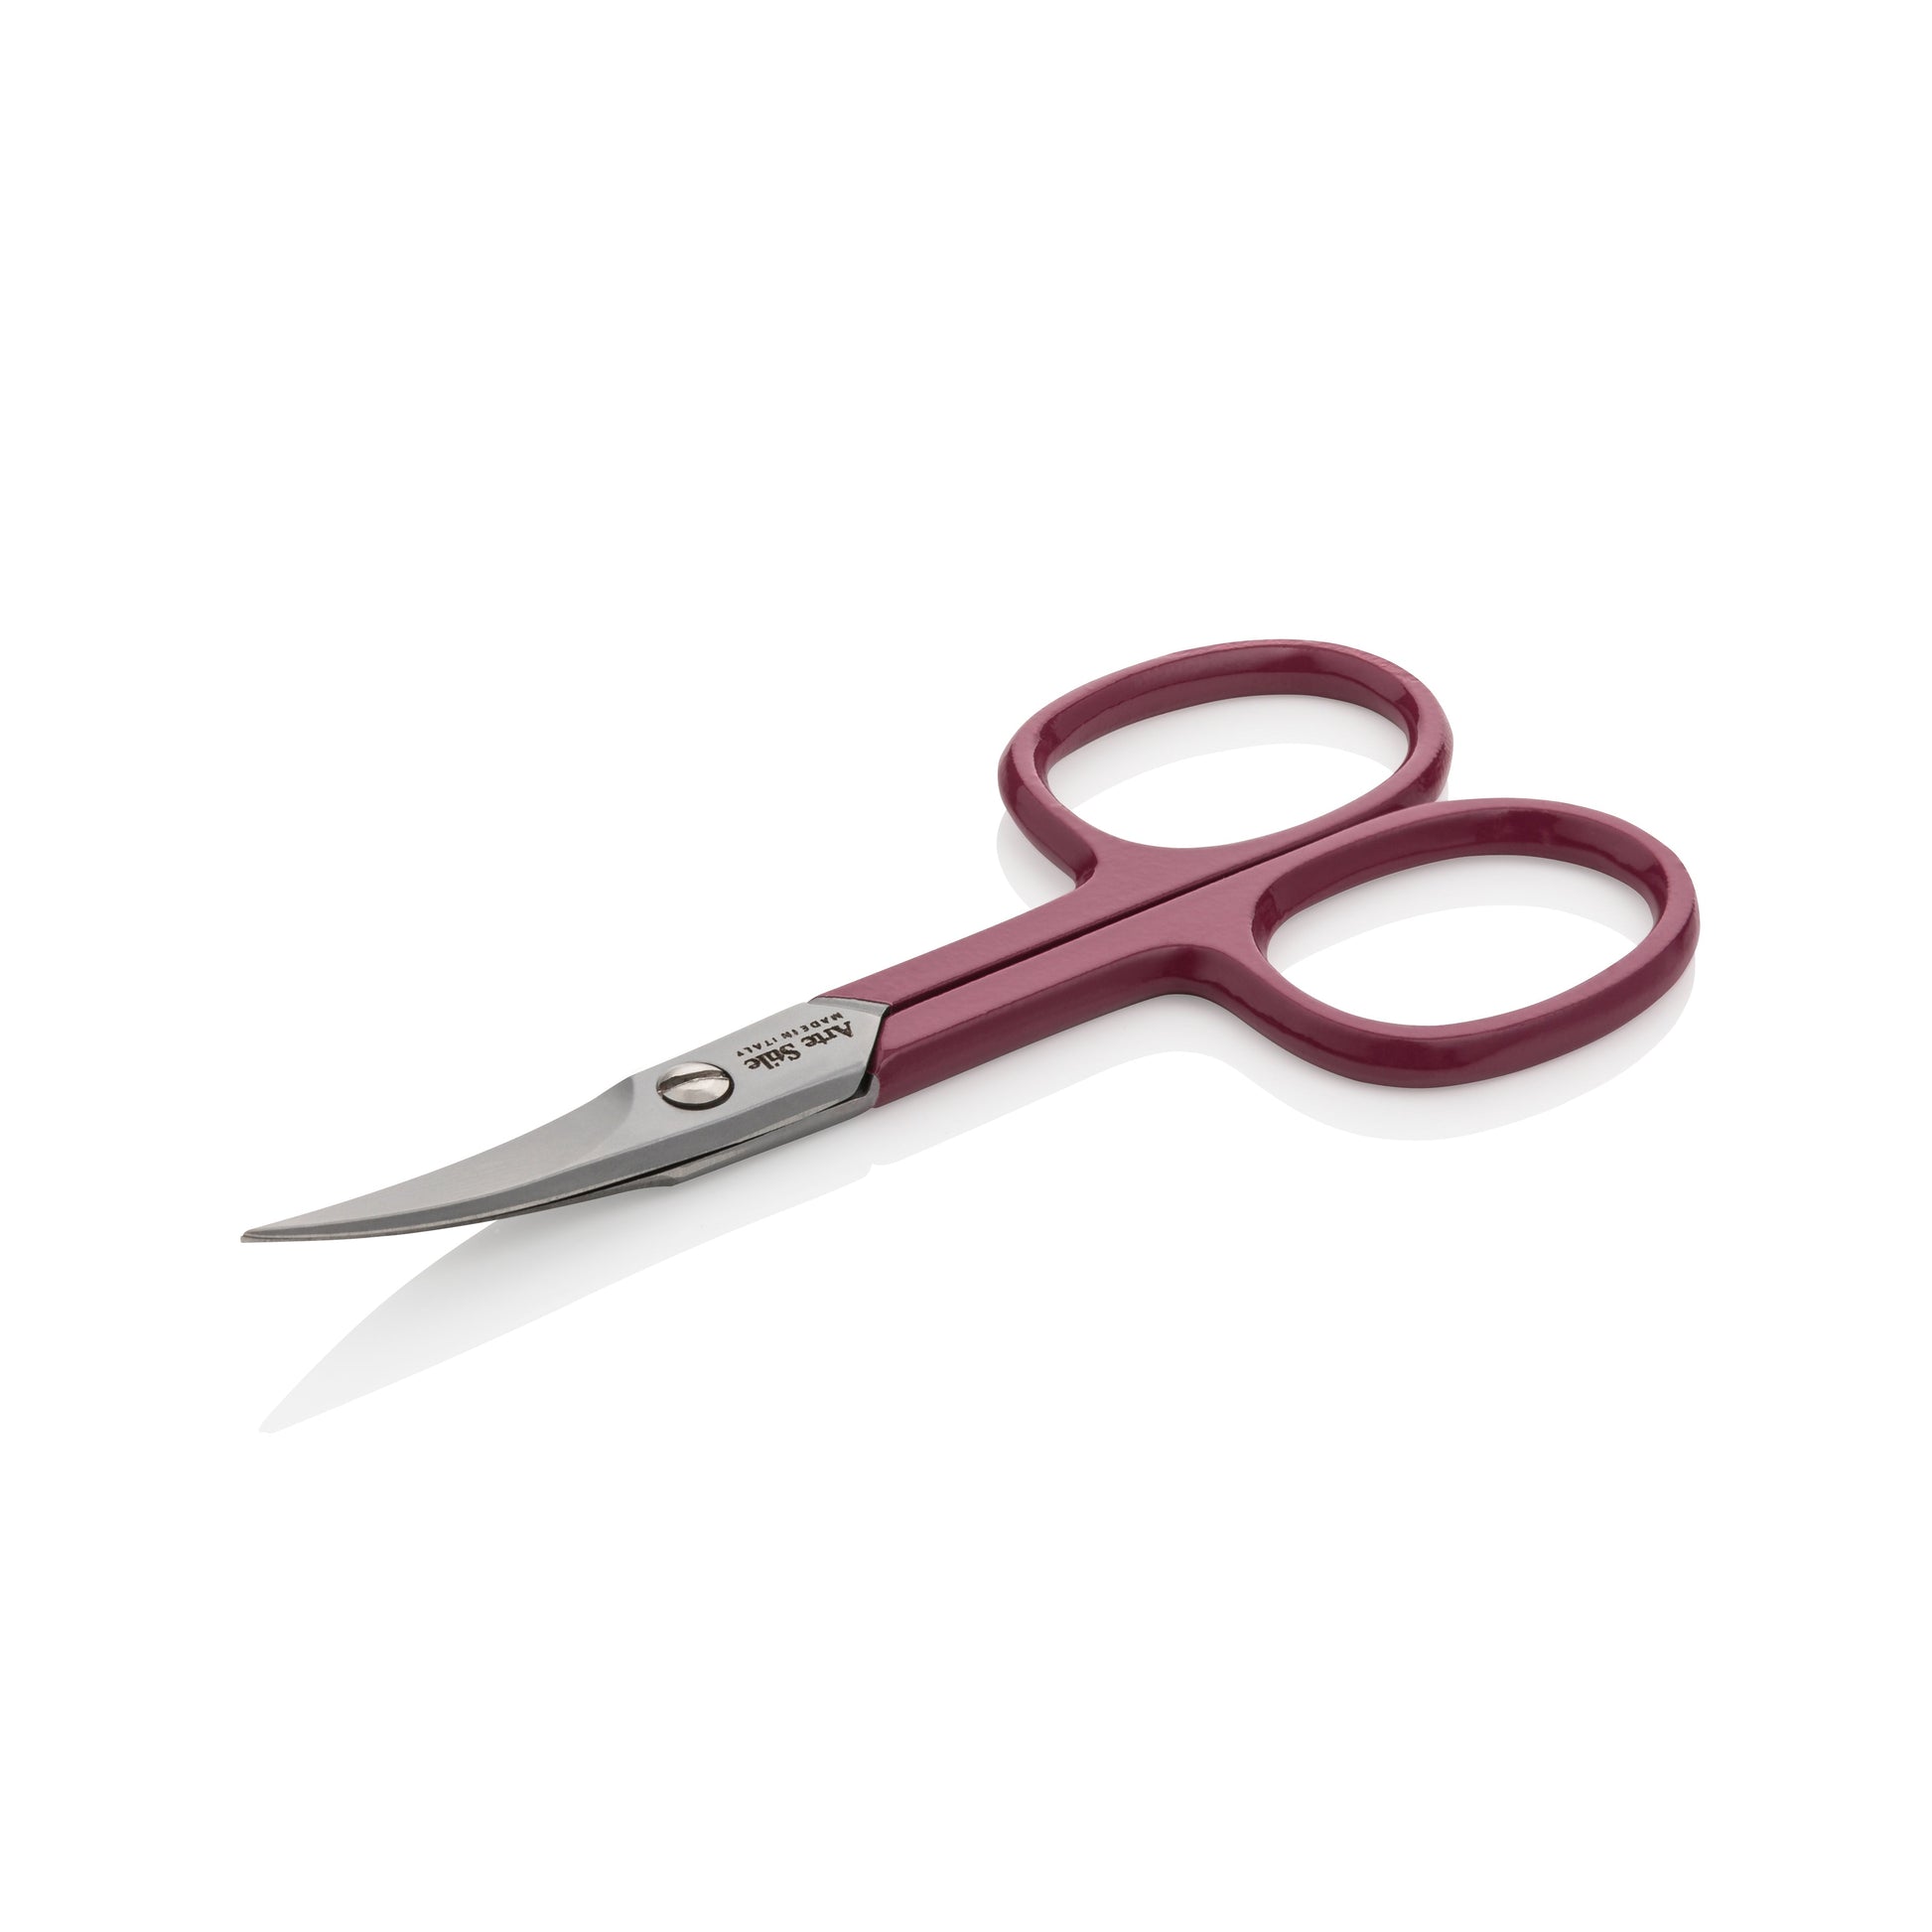 Your New Favourite Nail Scissors - ArteStile Nail Scissors in Black